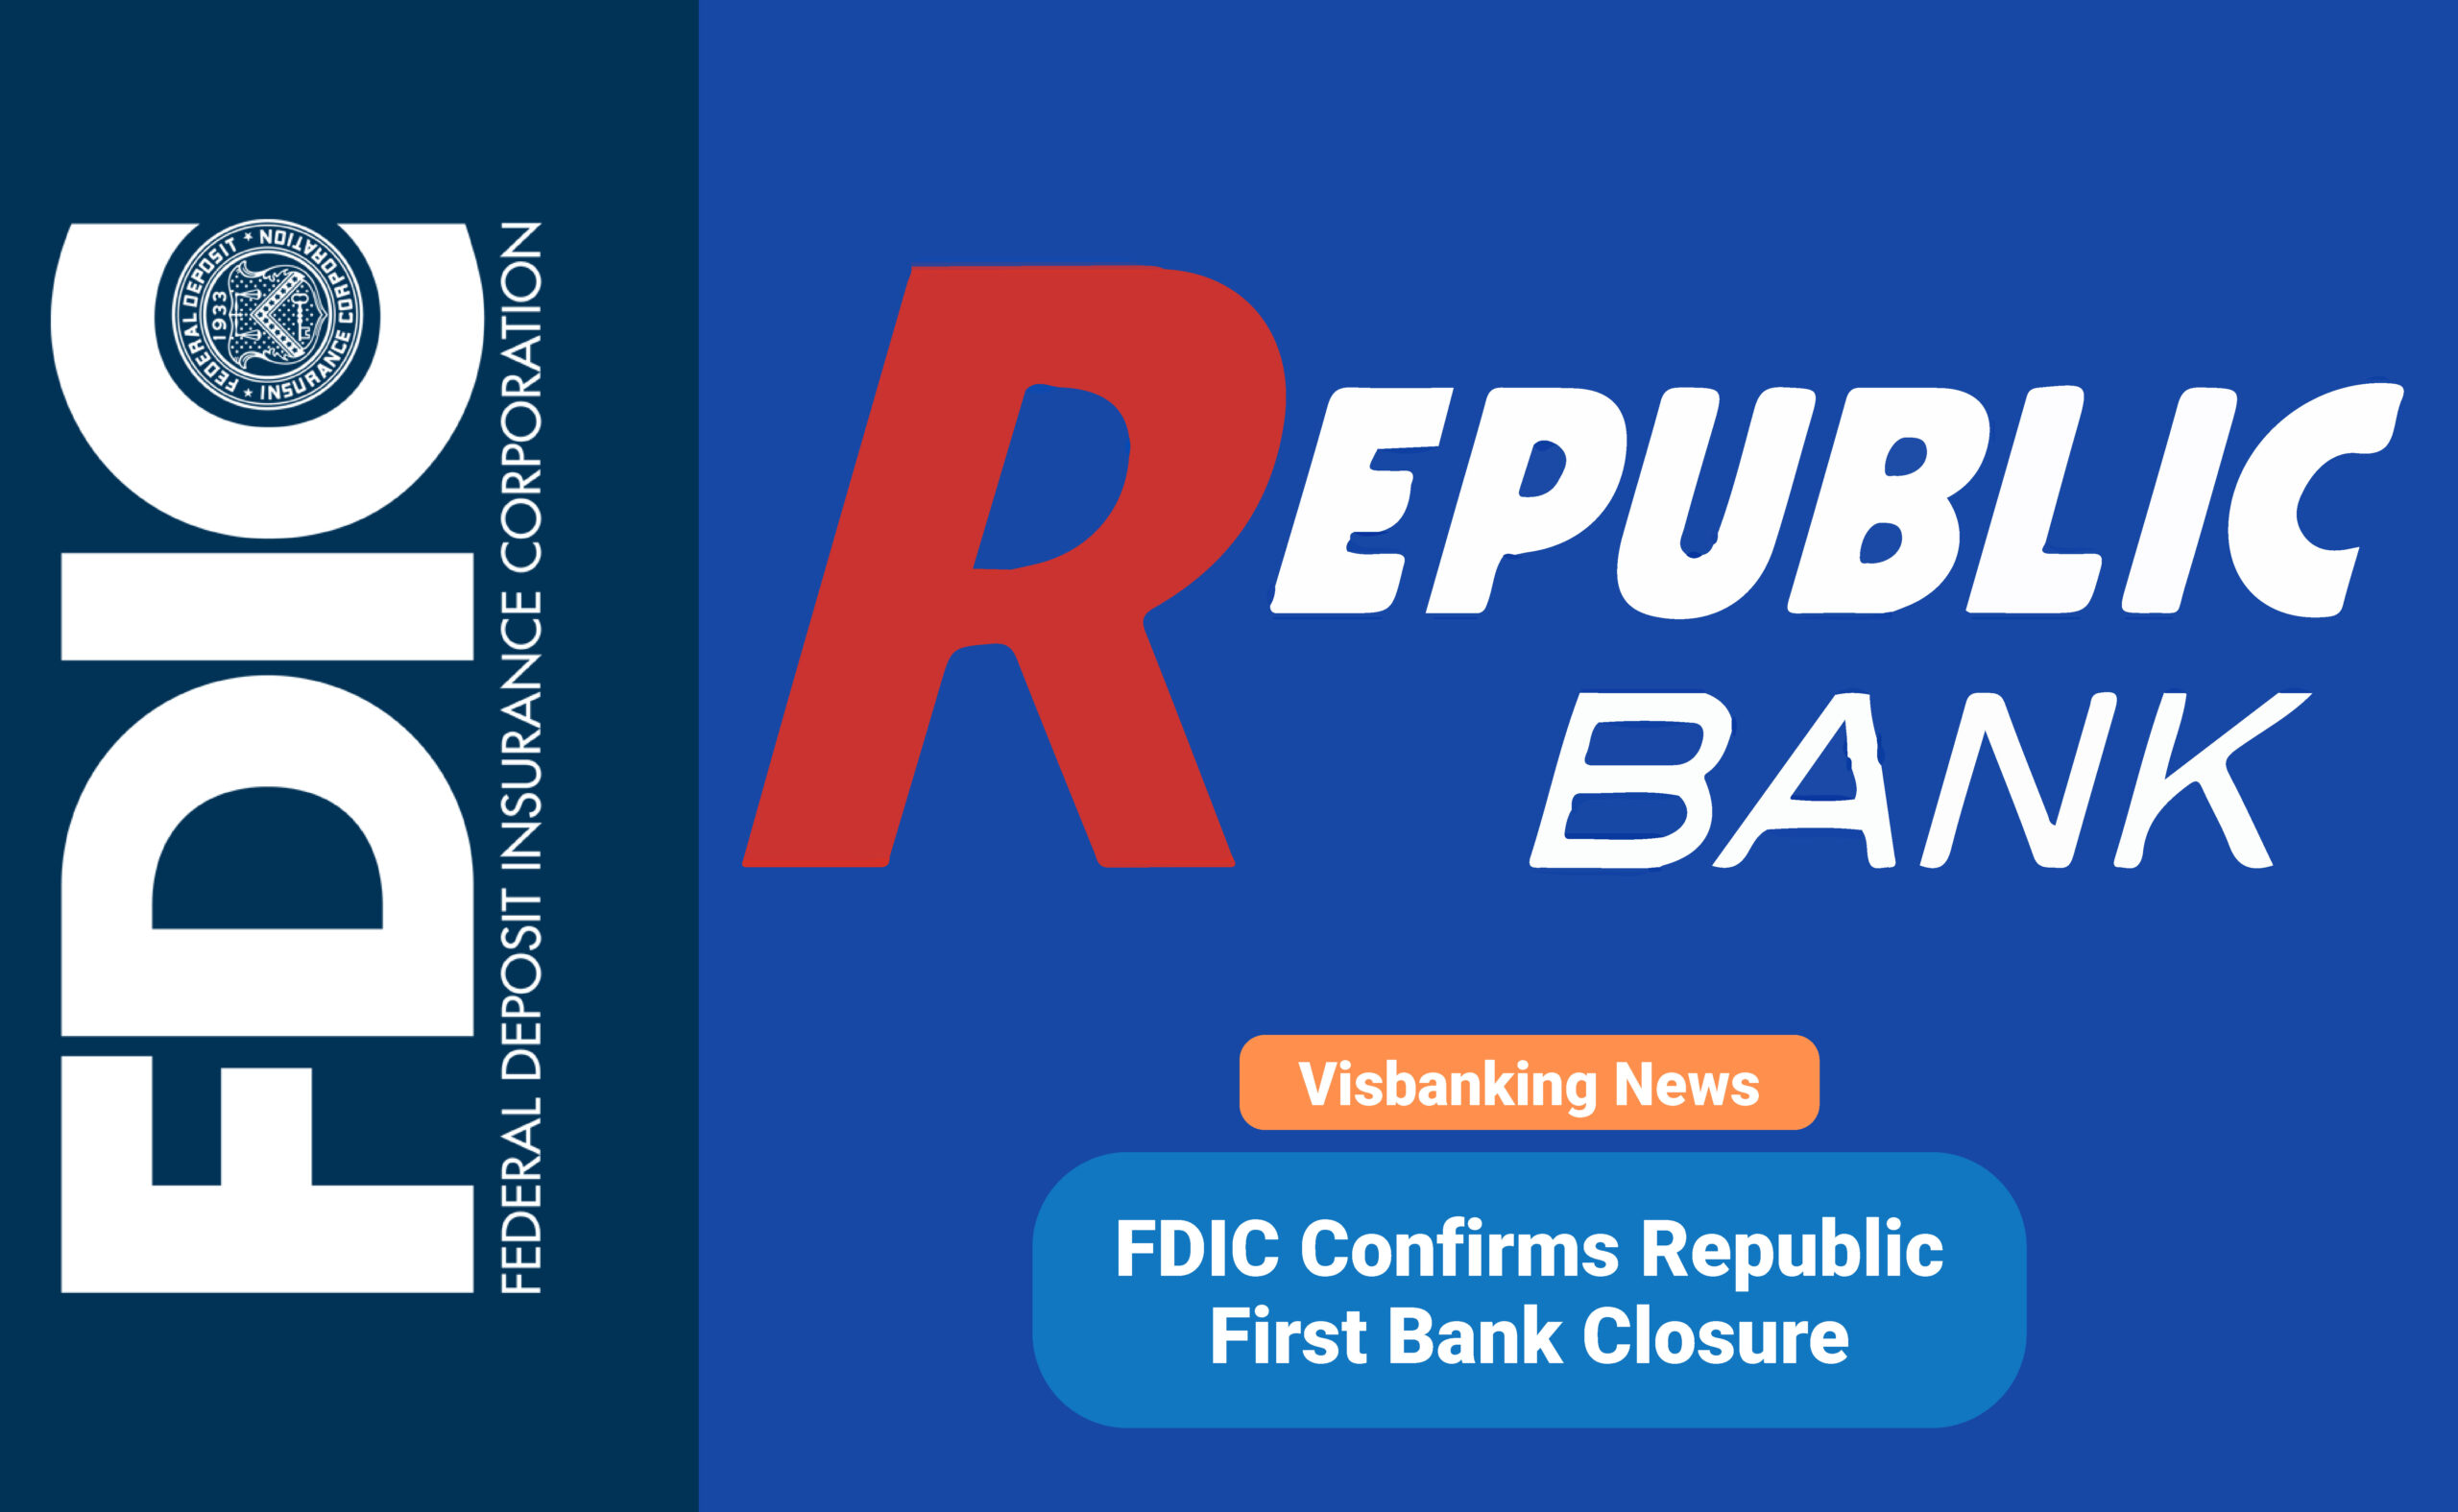 FDIC Confirms Republic First Bank Closure